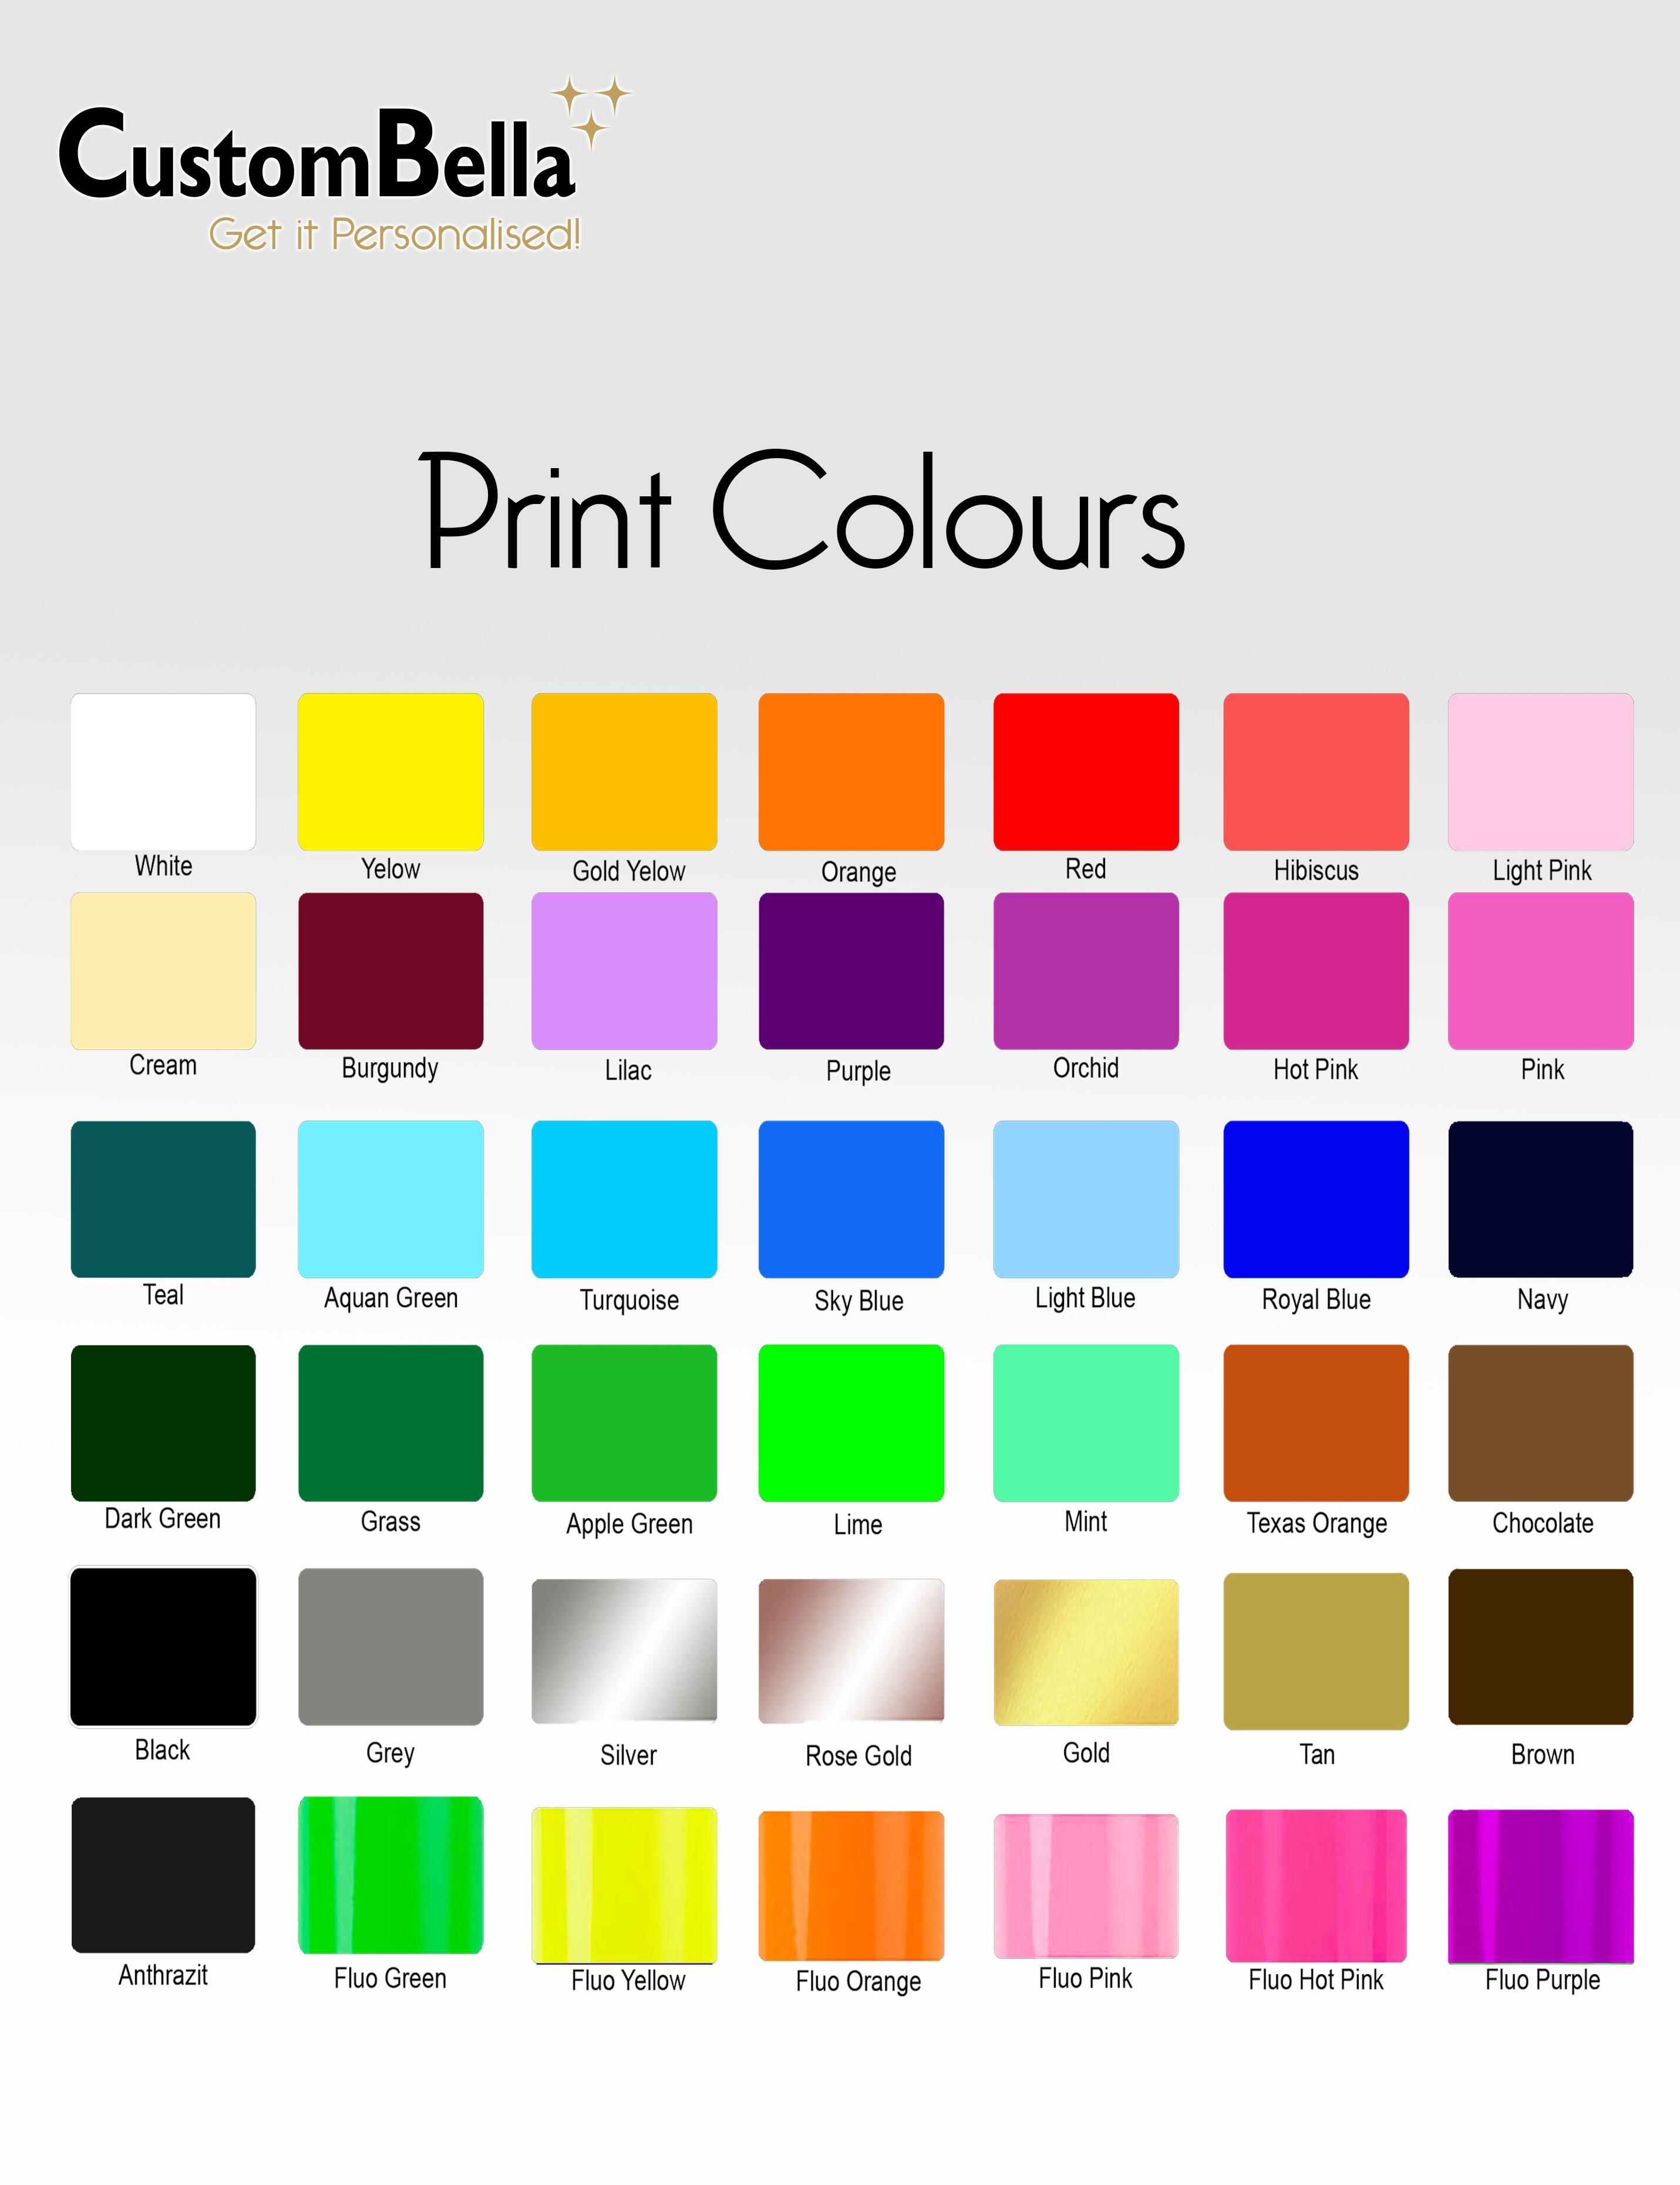 Custombella print colours to print